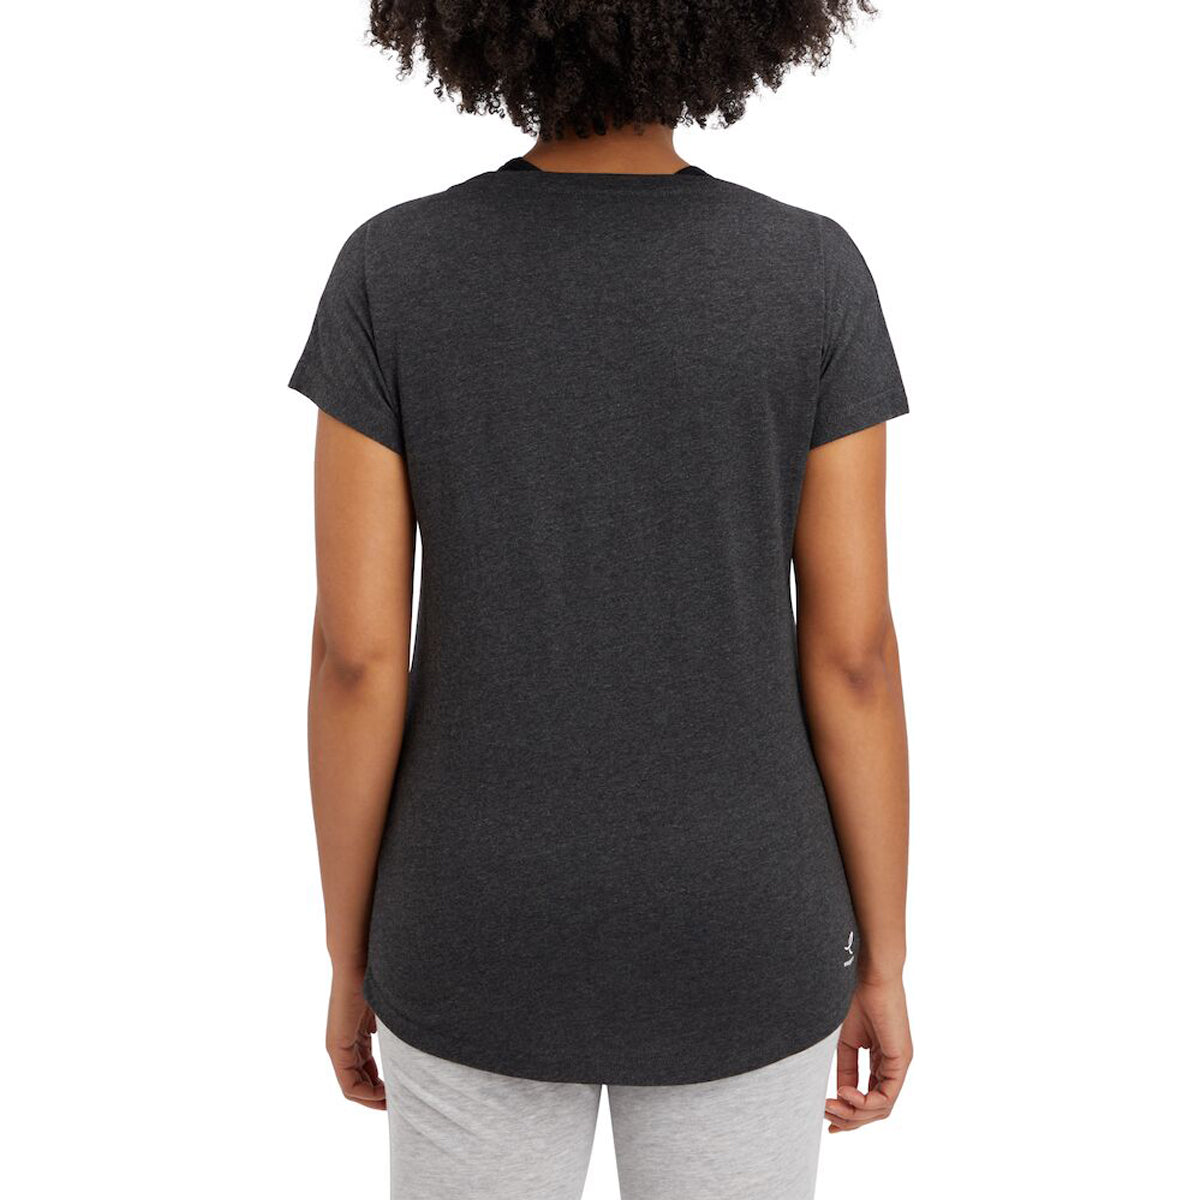 Energetics Cully Lifestyle T-Shirt For Women, Dark Grey